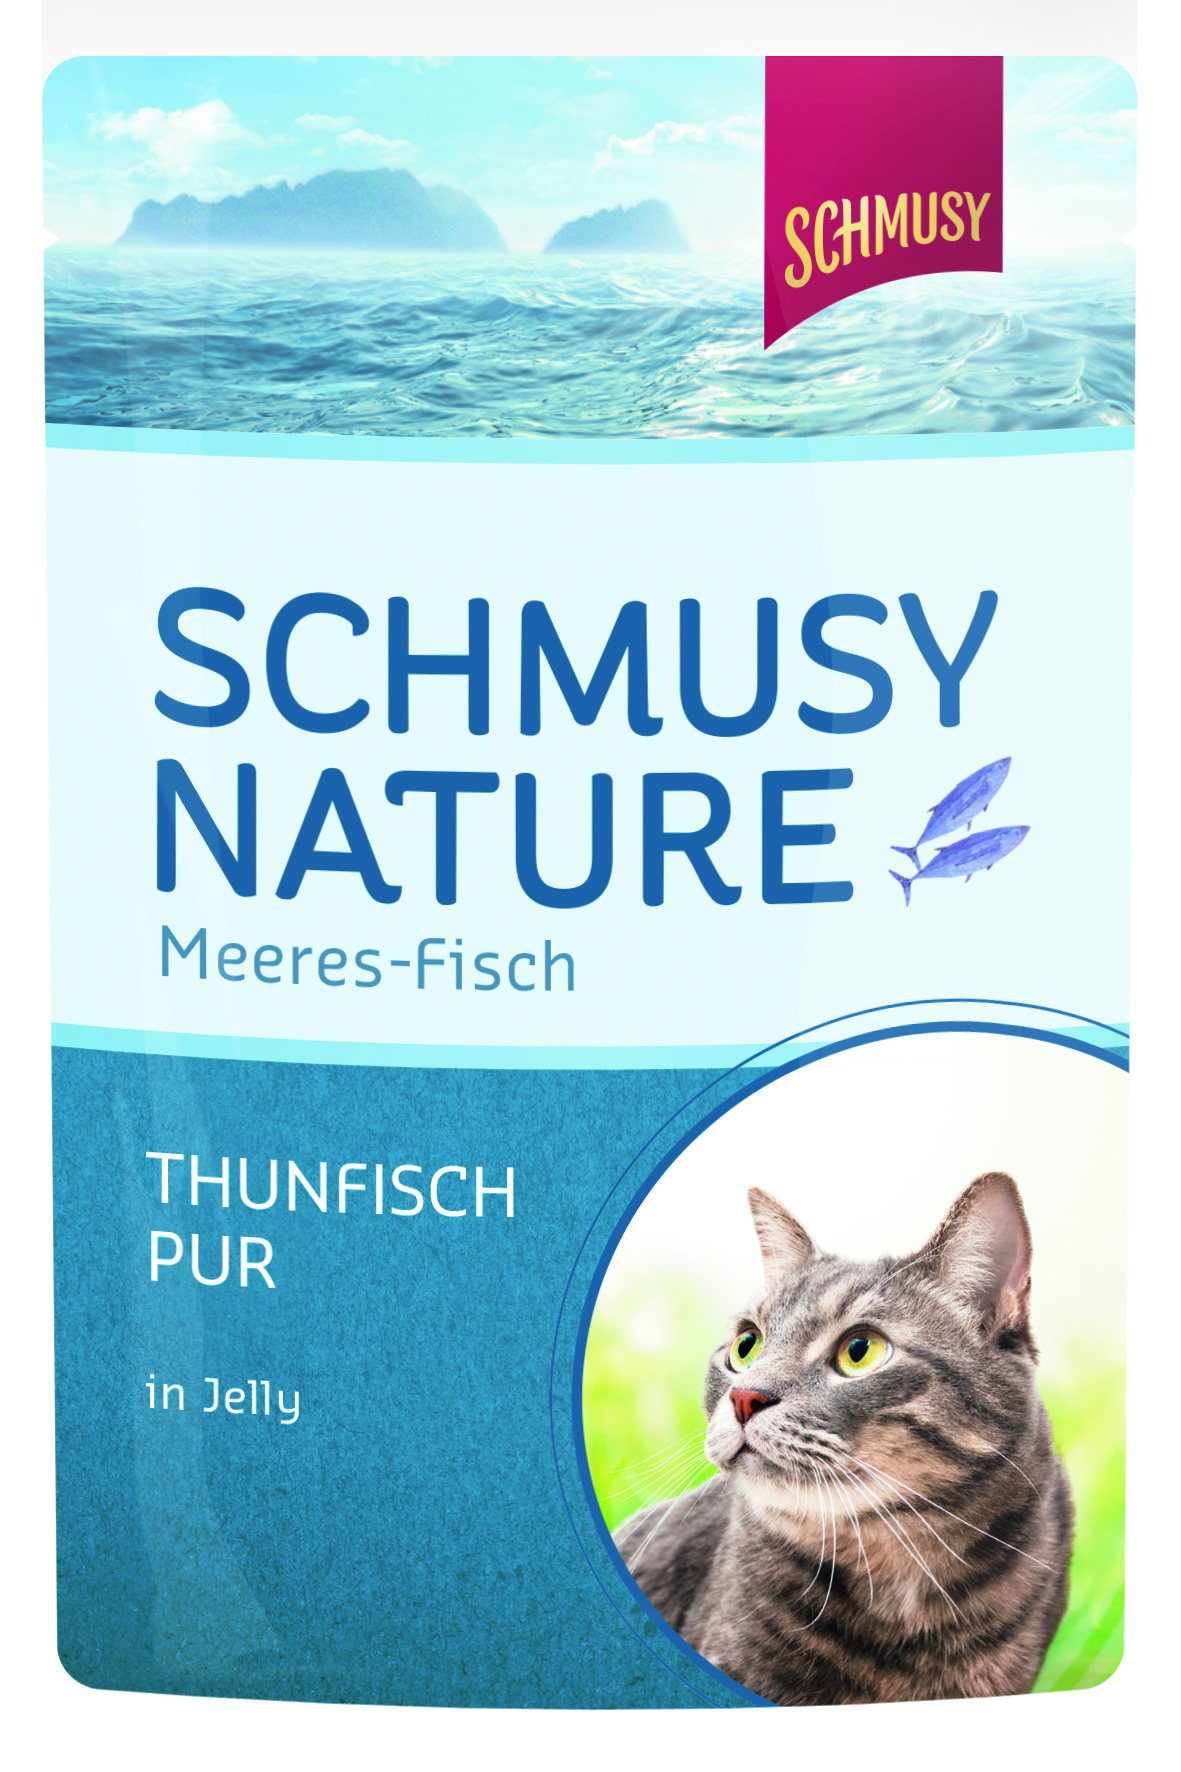 Schmusy Nature Meeres-Fisch Thunfisch pur  100g